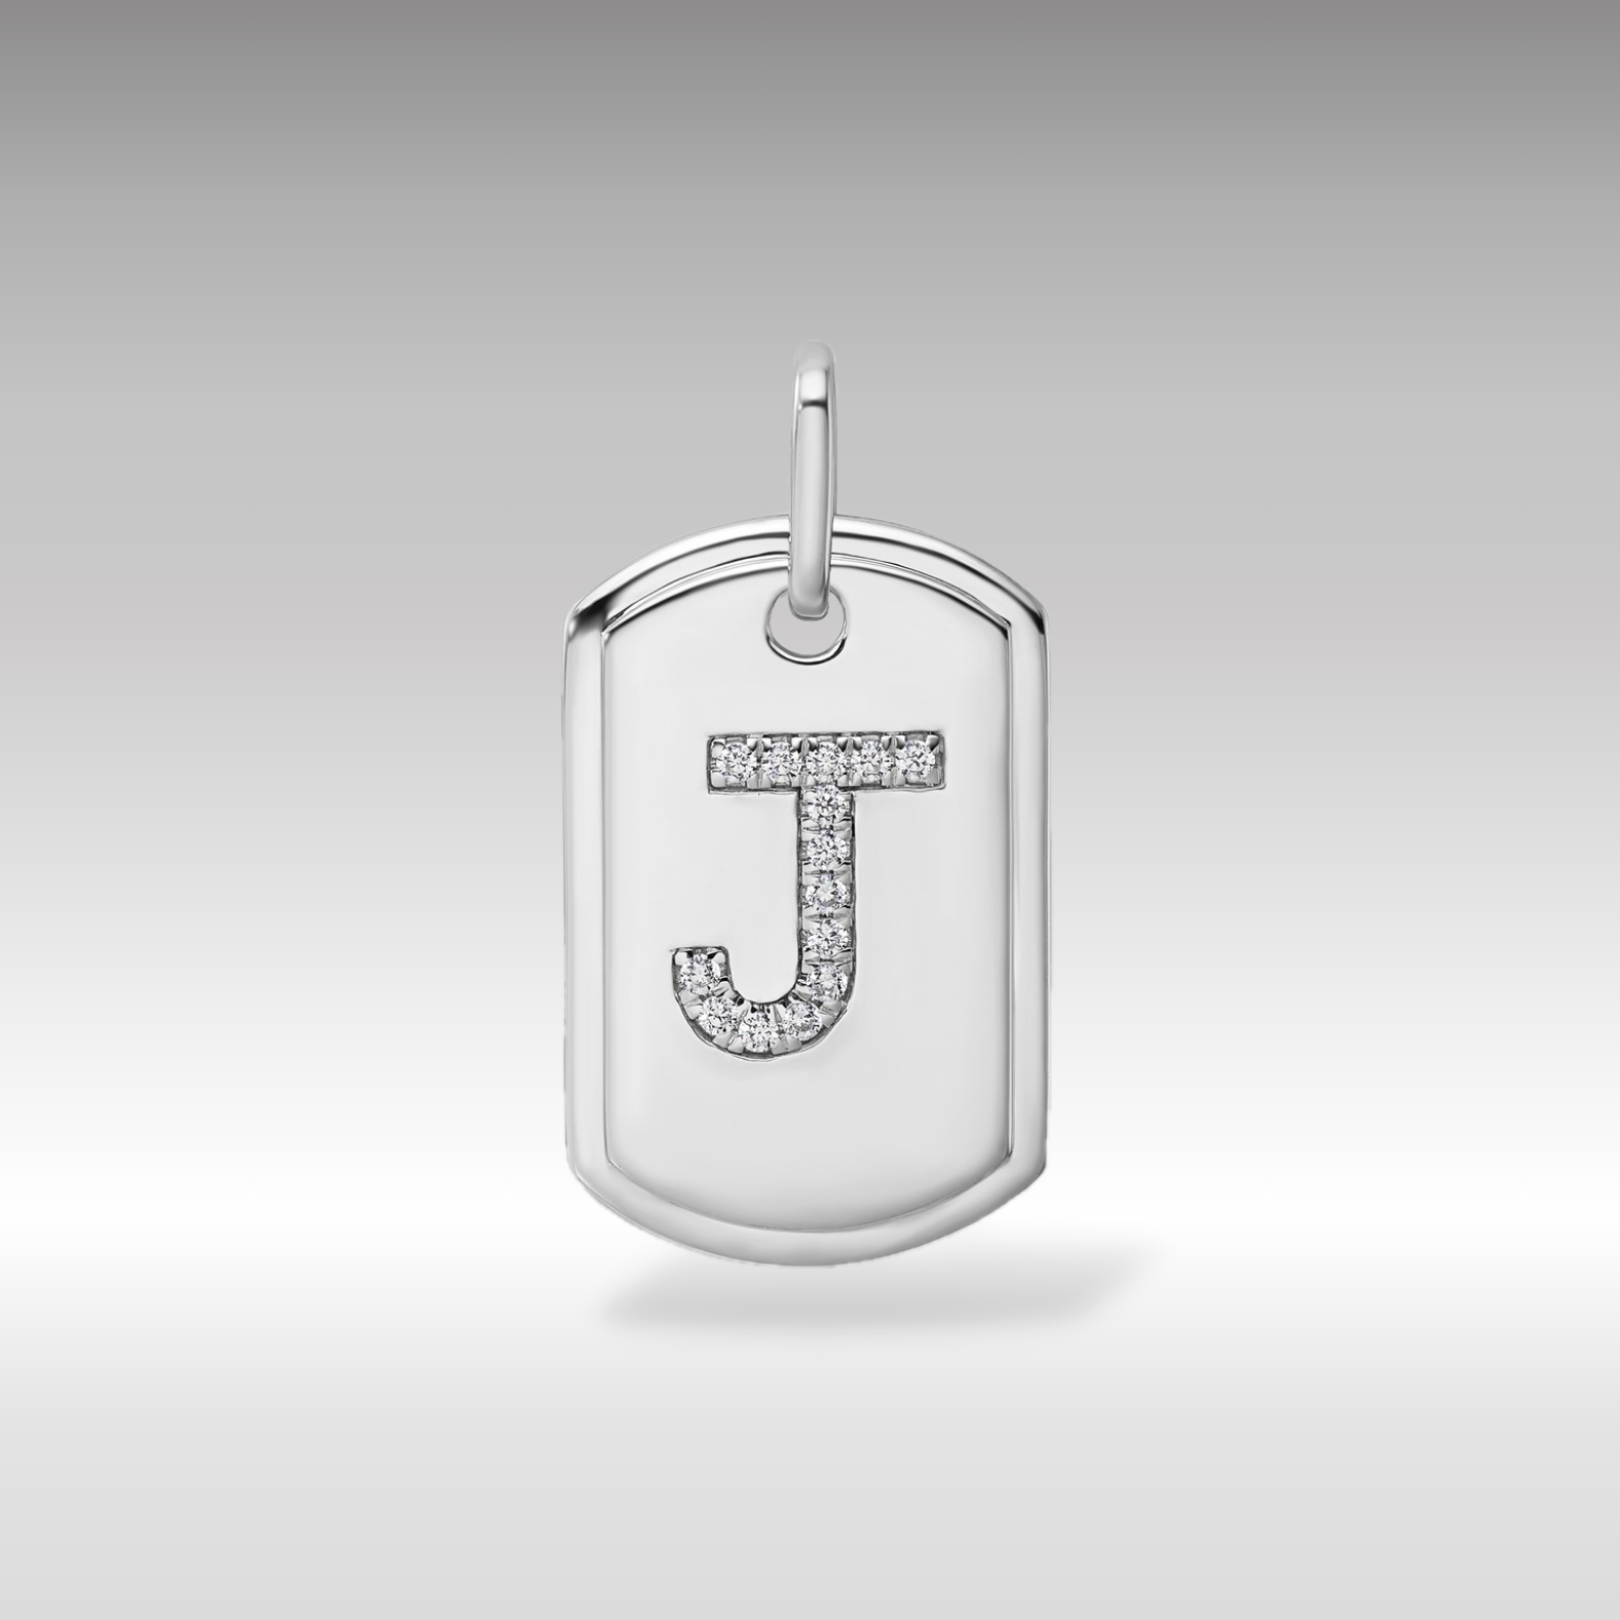 14K White Gold Initial "J" Dog Tag With Genuine Diamonds - Charlie & Co. Jewelry